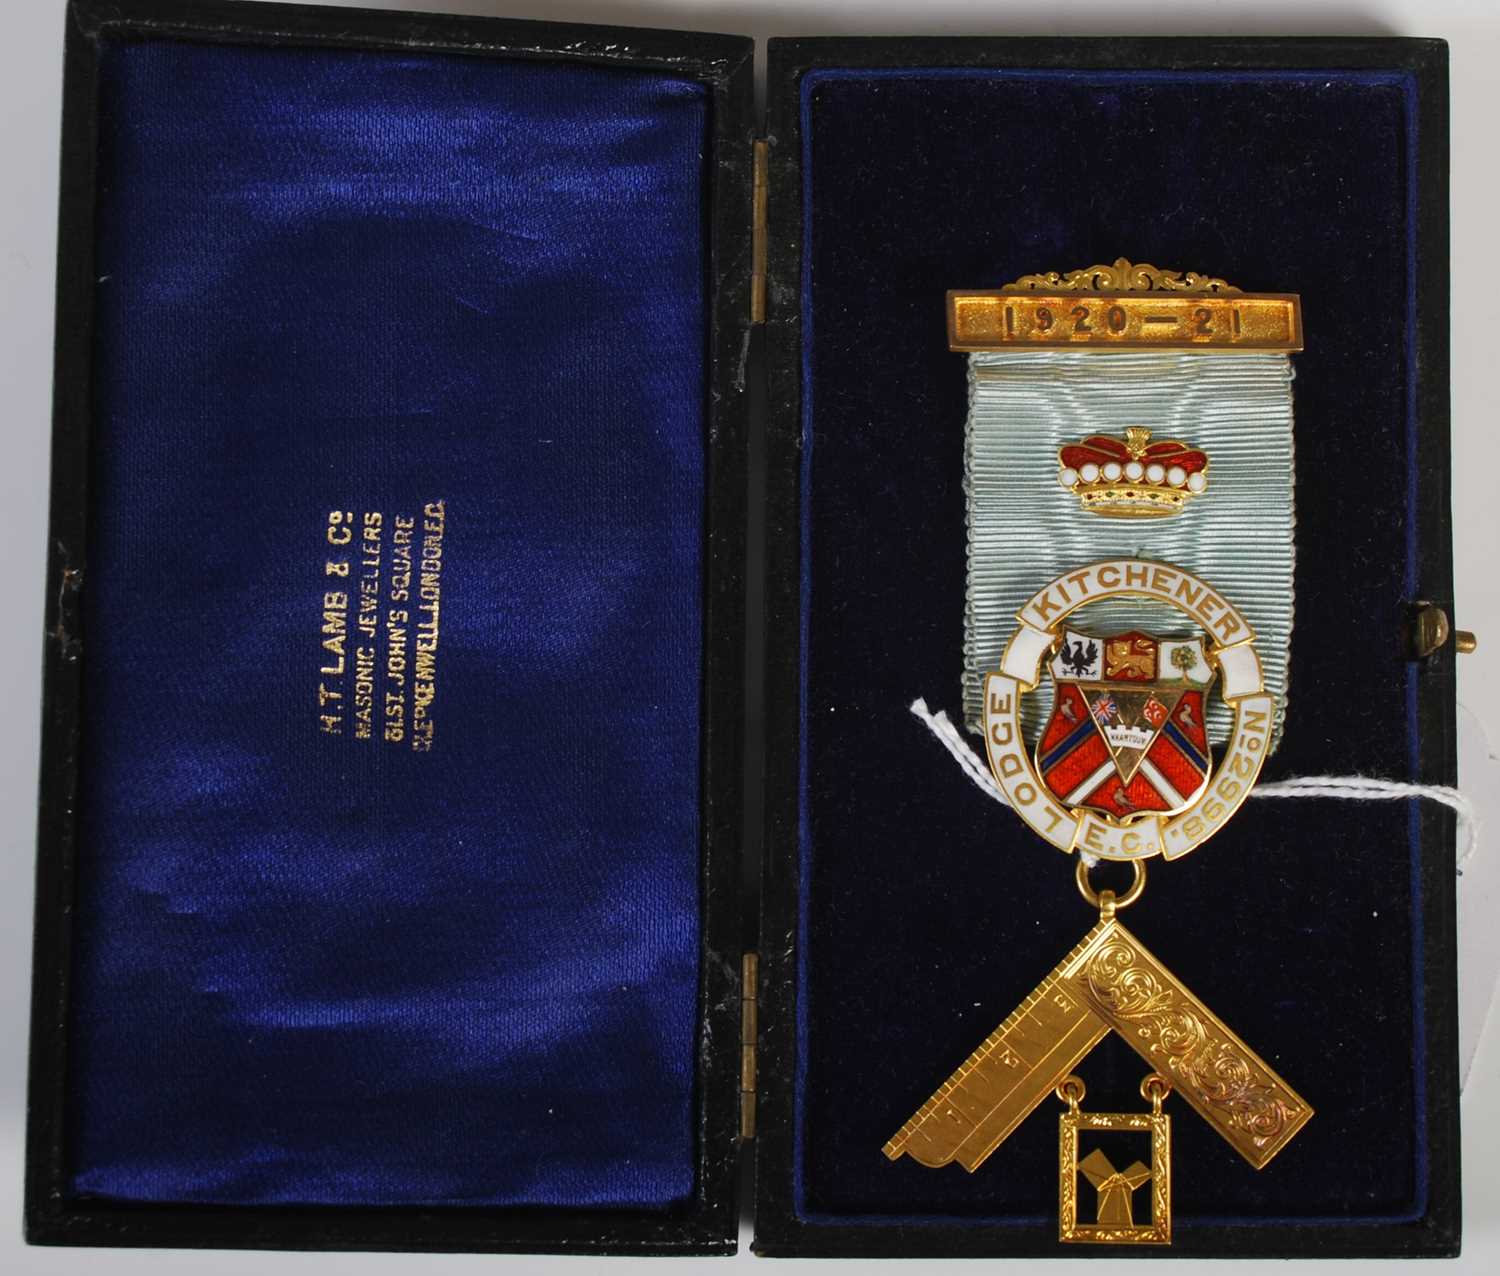 Masonic interest - a 15CT gold and enamel Masonic jewel for Kitchener Lodge No2998, 1920-21, the set